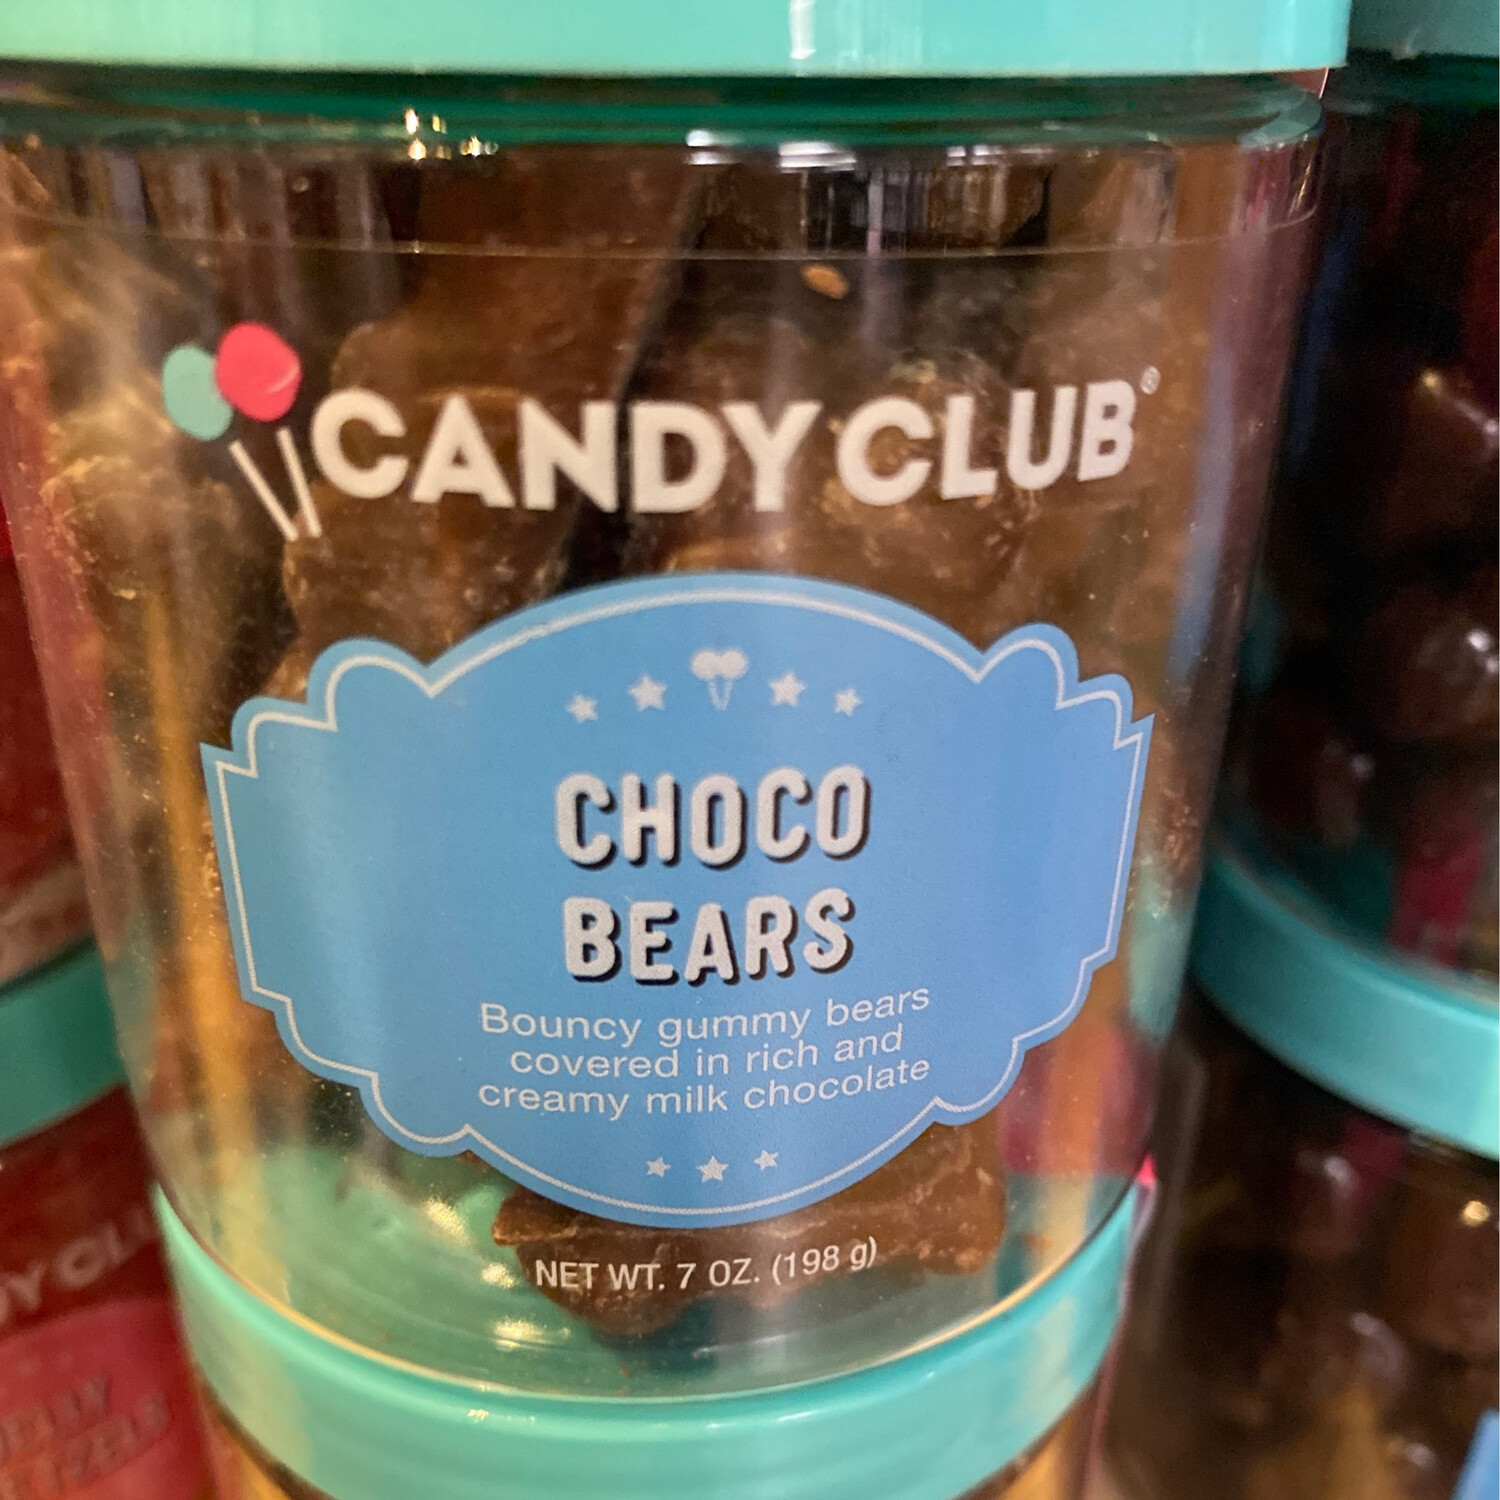 Candy Club Choco Bears